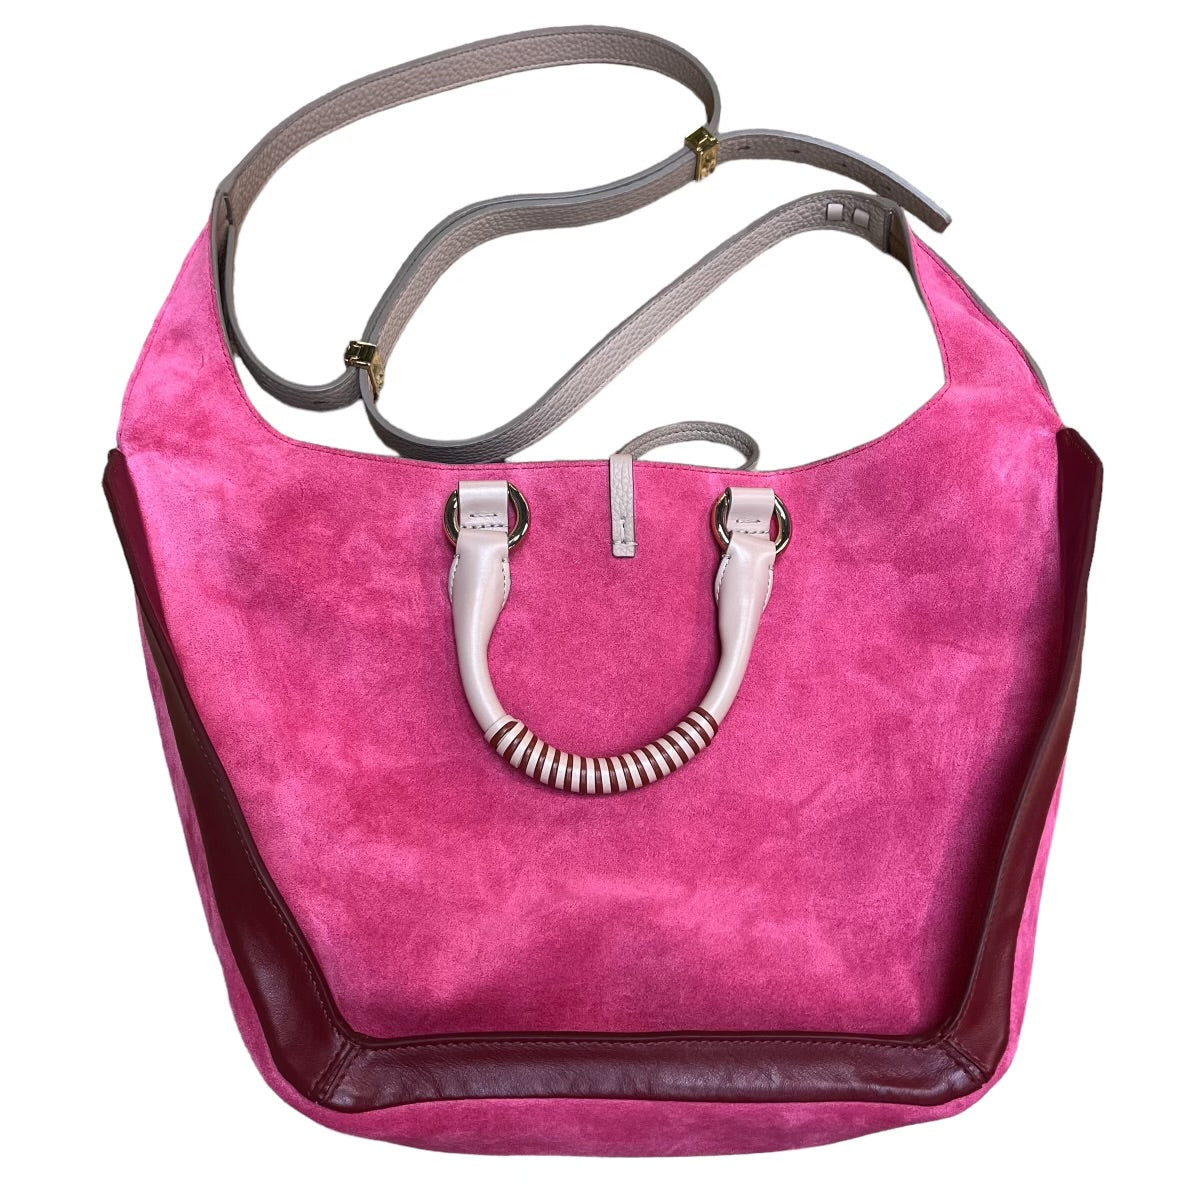 Handbag Designer Chloe, Size Large